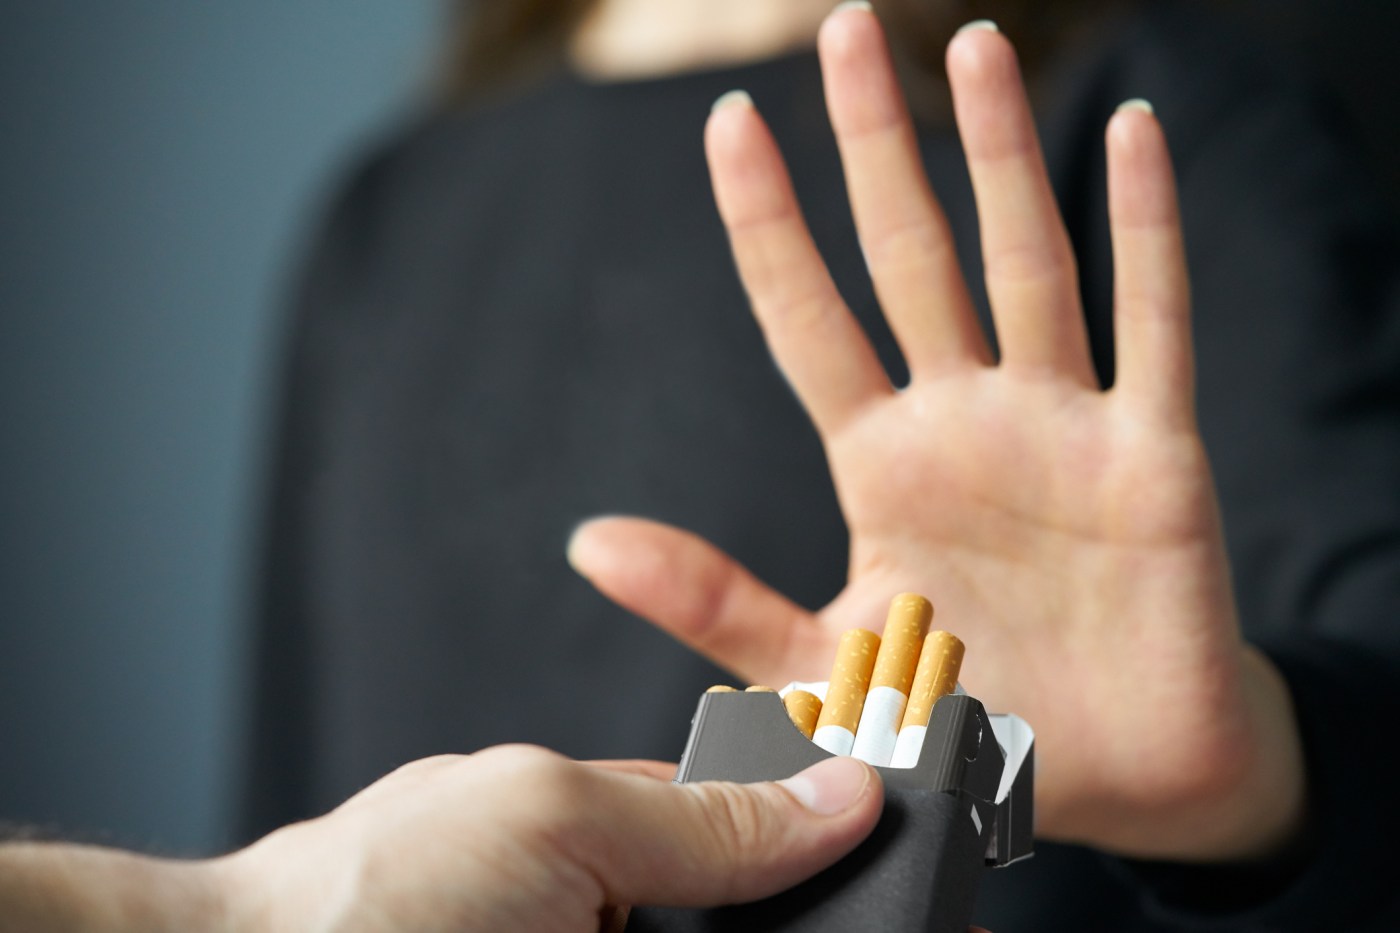 VA’s Stay Quit Coach app helped VA employee quit smoking